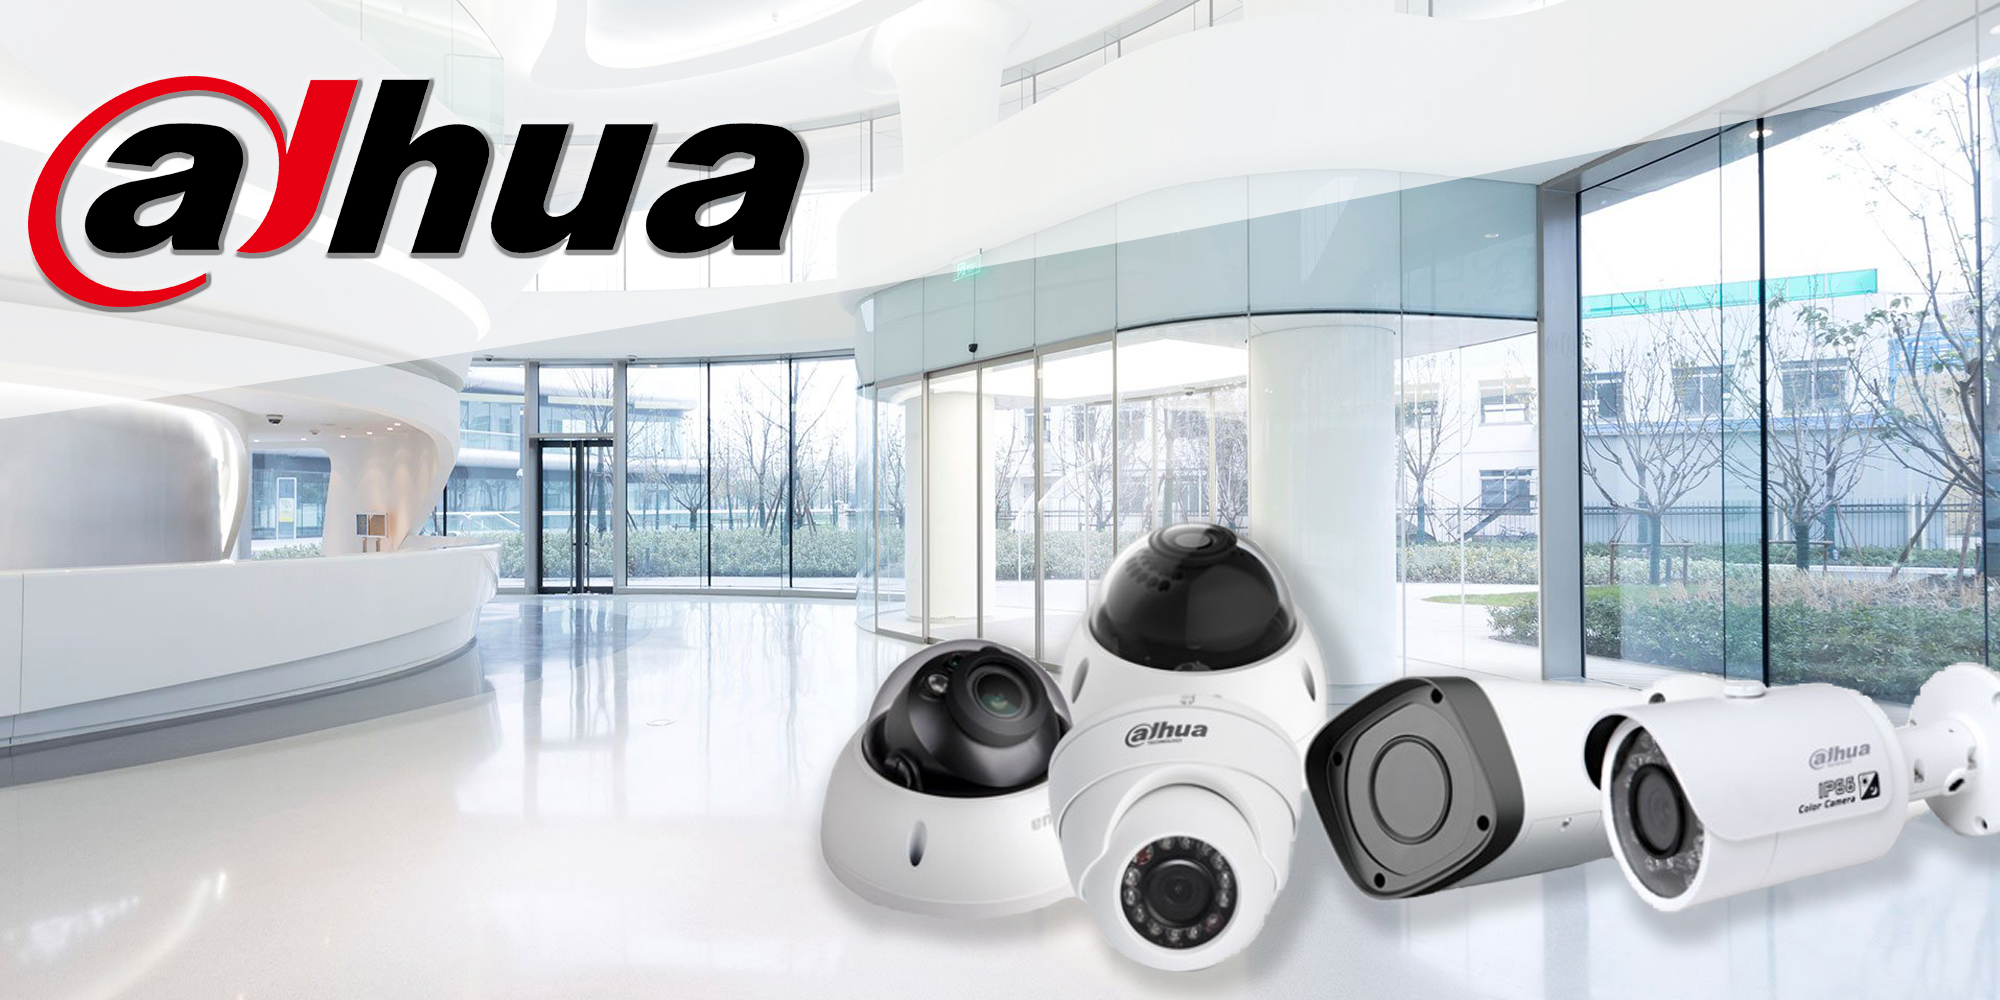 Dahua MOI approved cameras in Qatar